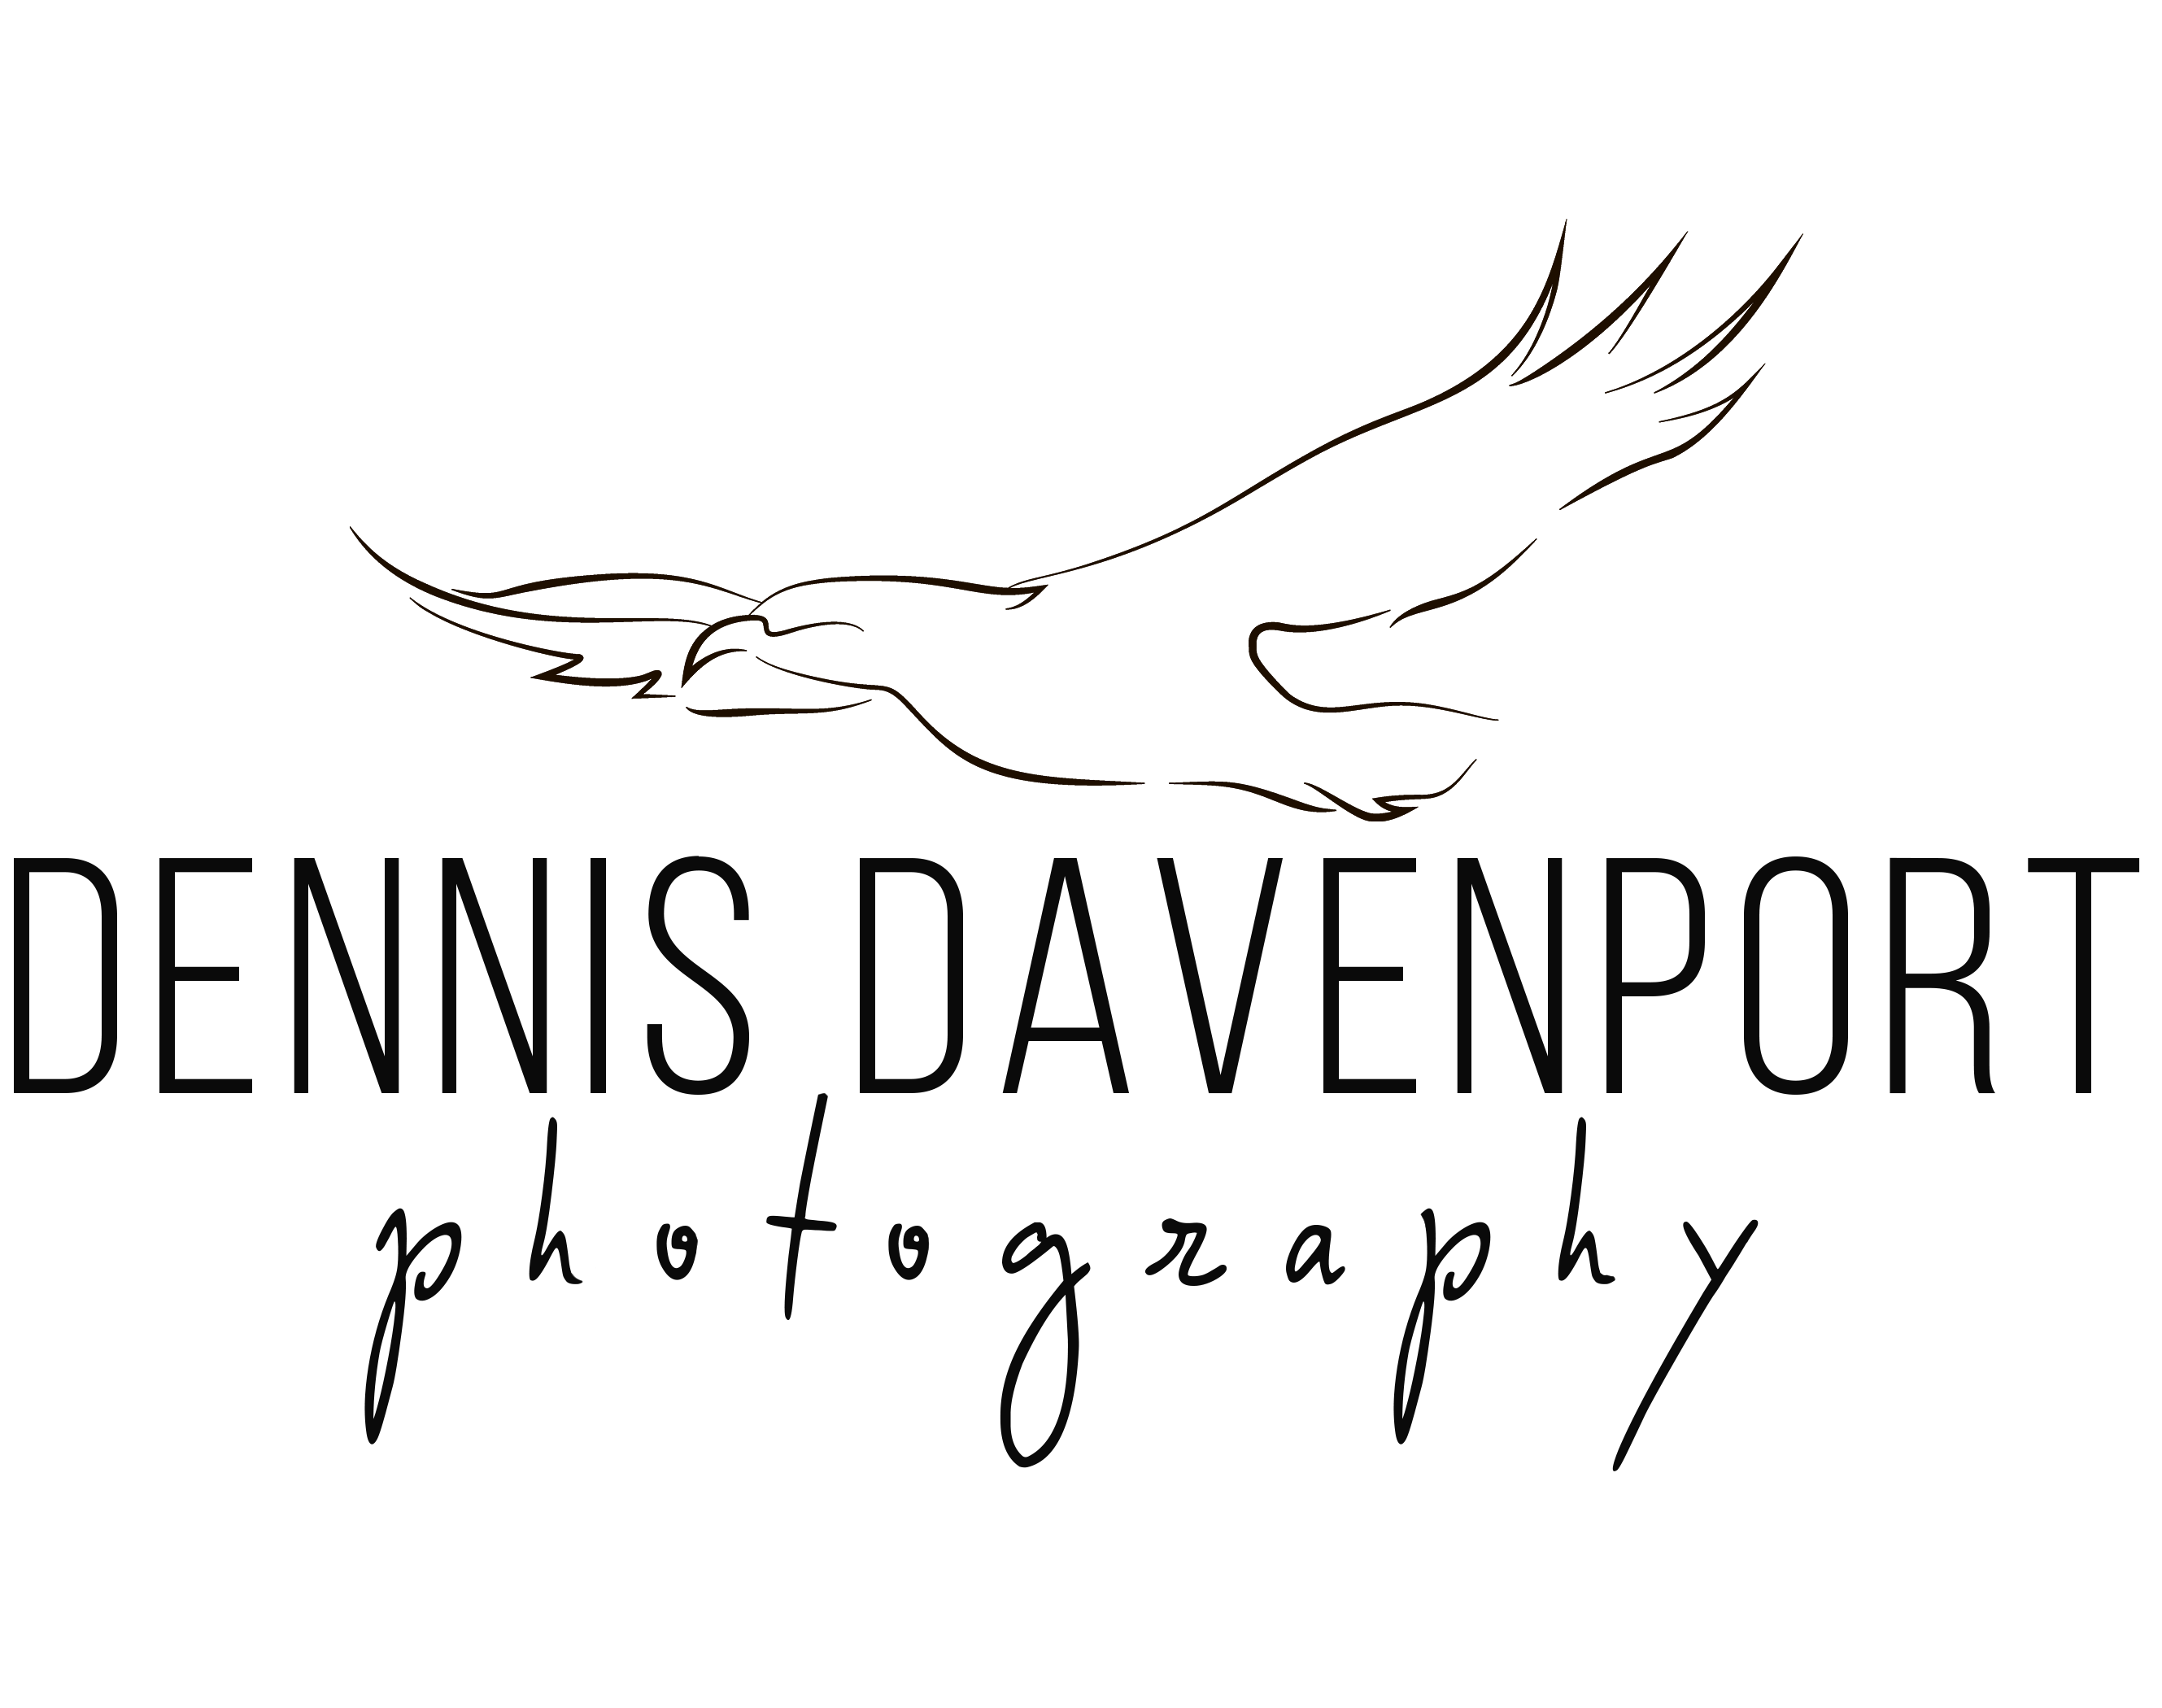 dennisdavenportphotography-logo draft-black